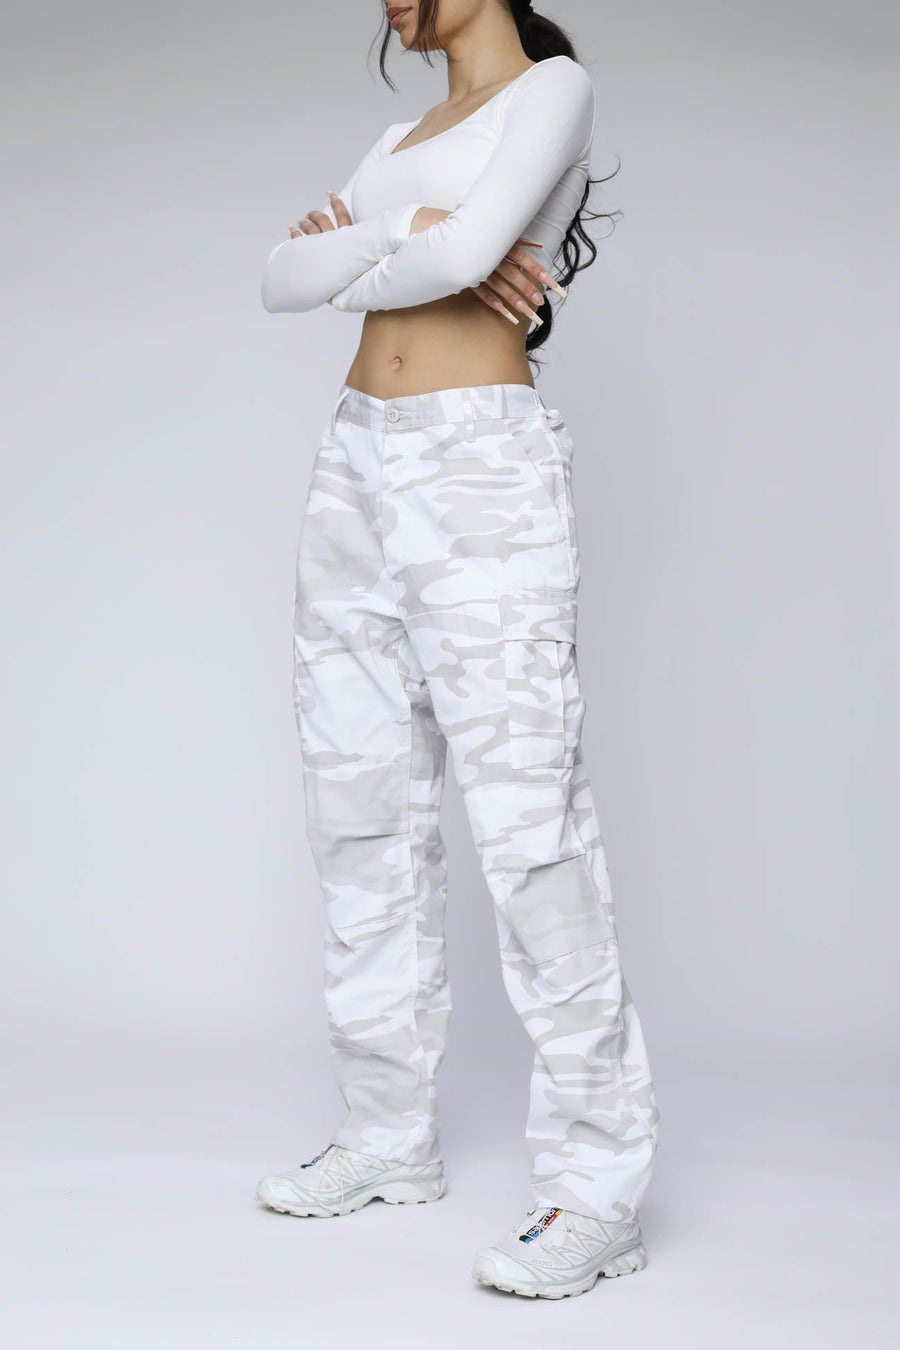 Snow Camo BDU Pants - M, XL